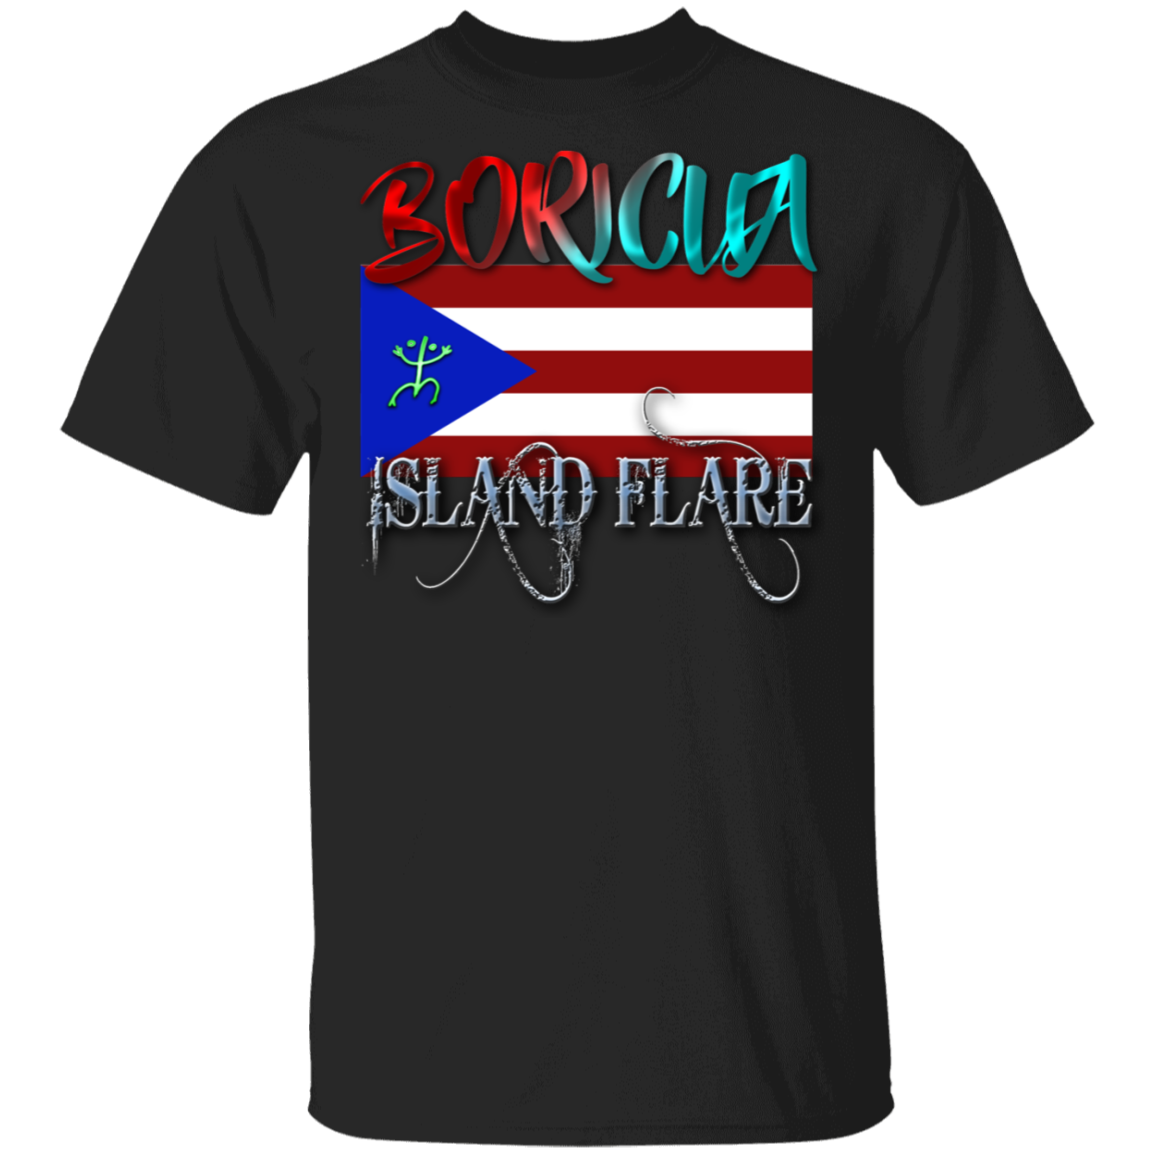 Boricua Island Flare 5.3 oz. T-Shirt